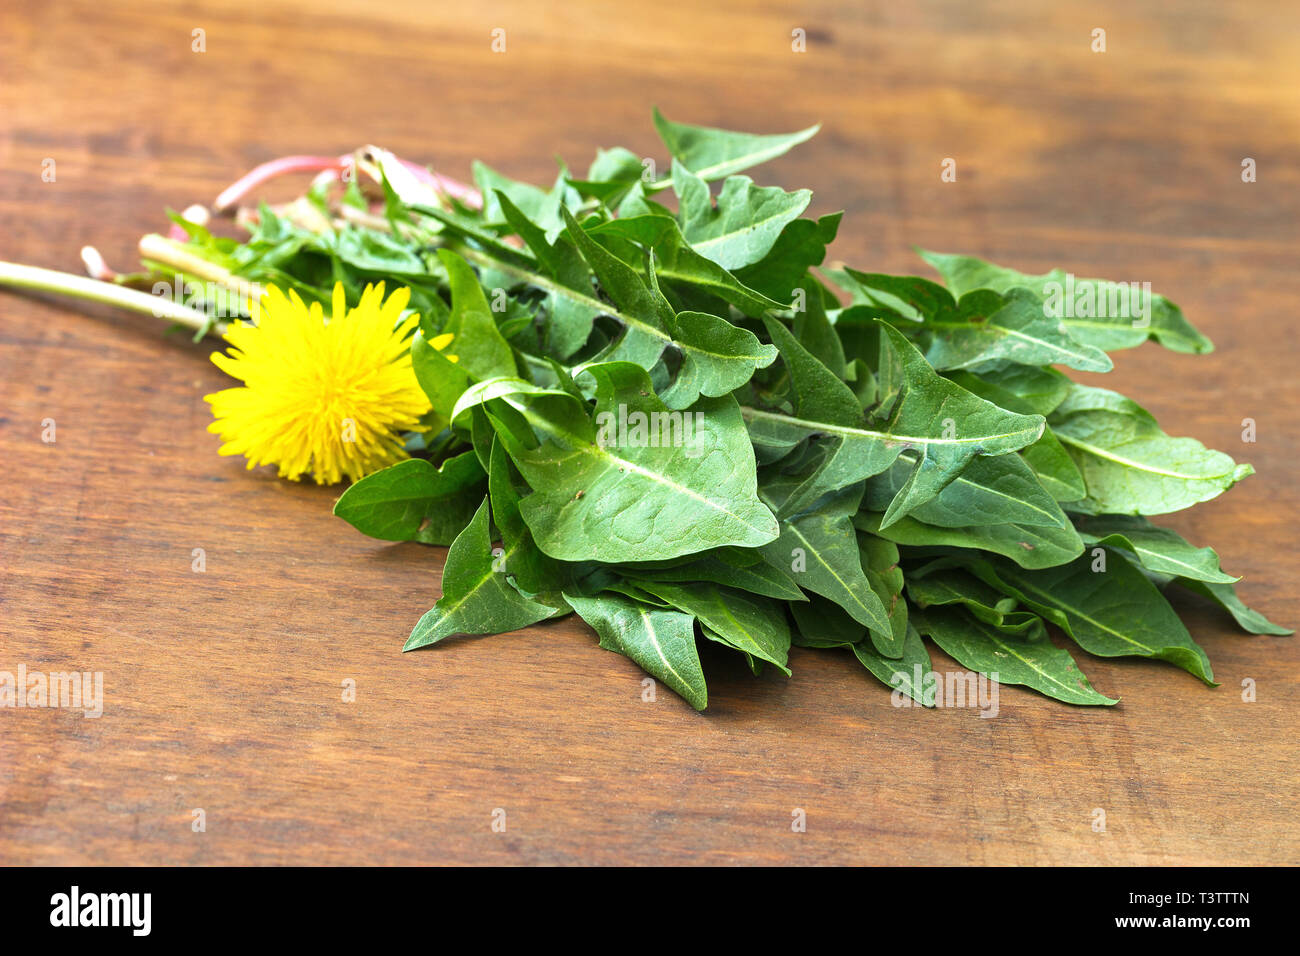 A green bundle of dandelion greens Stock Photo